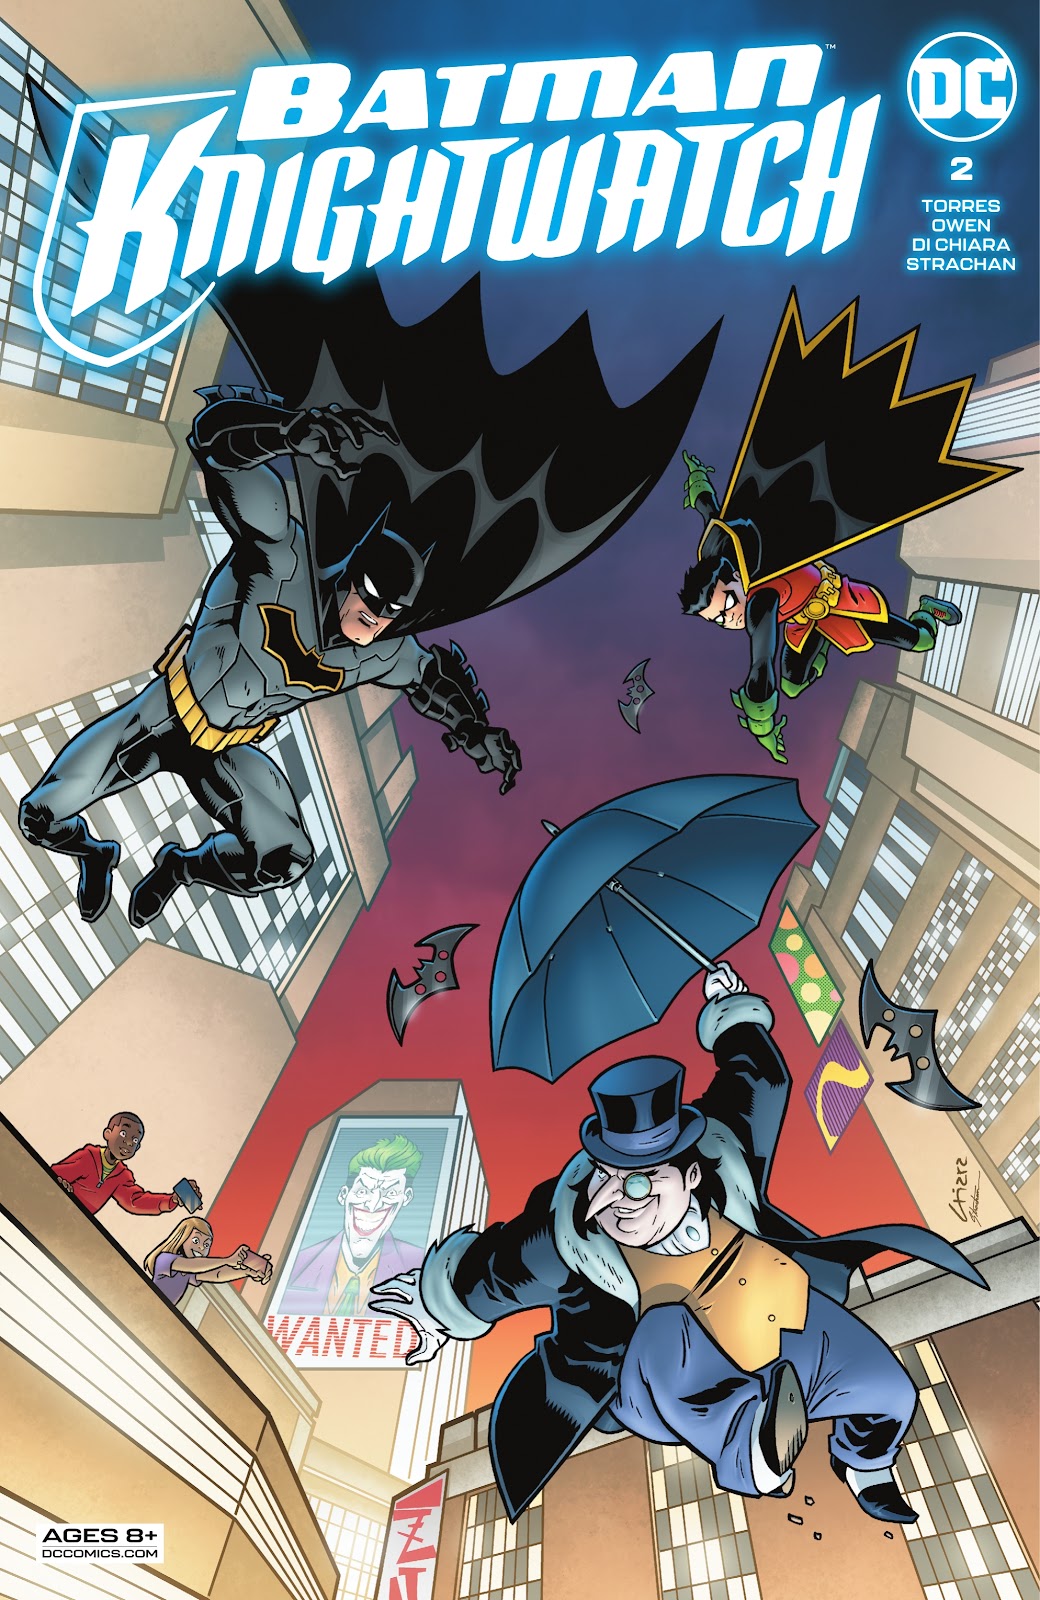 Batman - Knightwatch issue 2 - Page 1